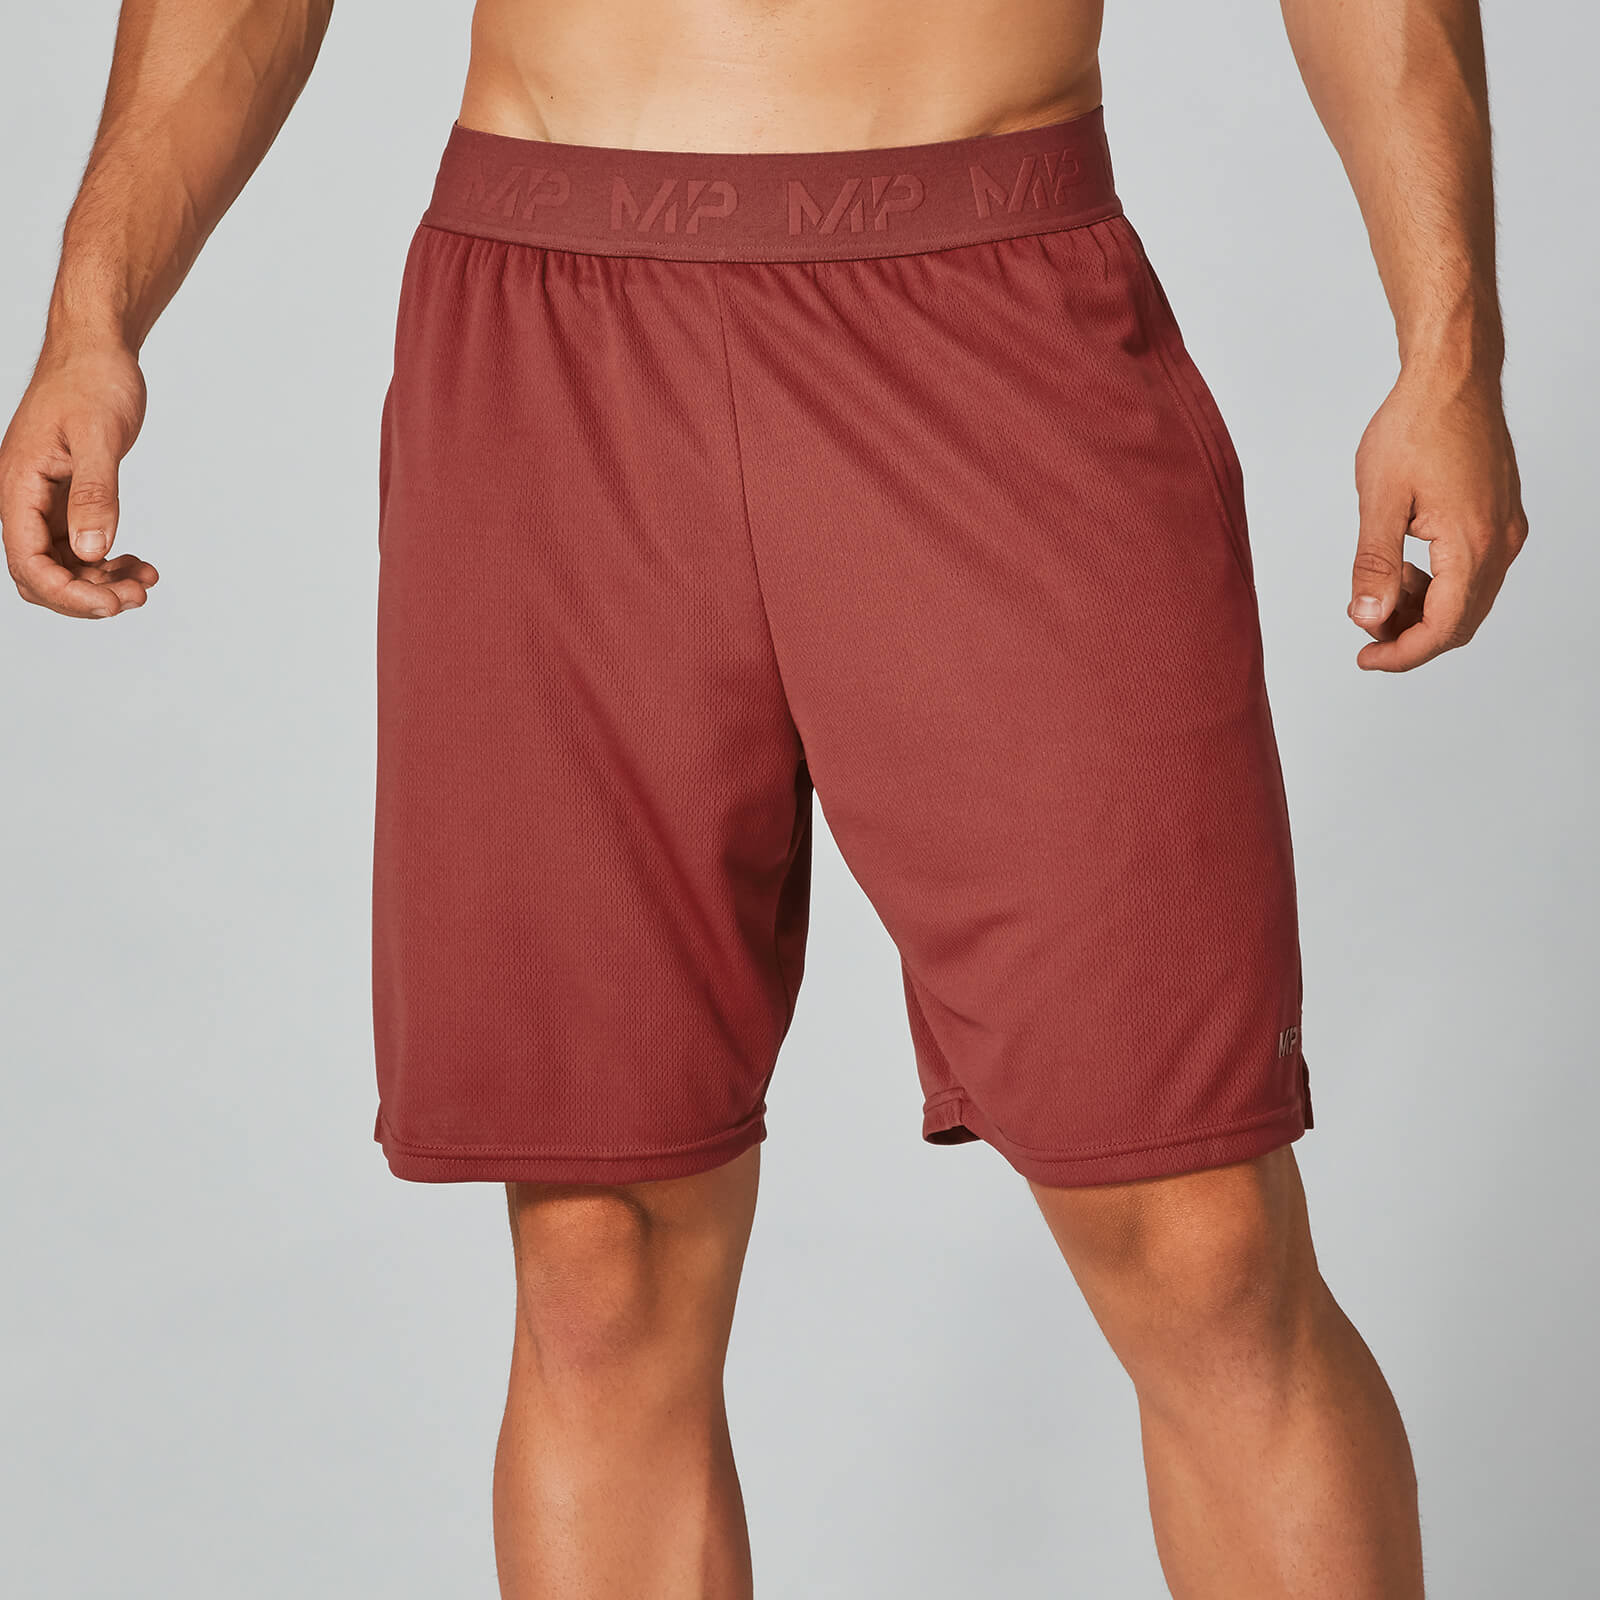 Dry-Tech 速乾系列男士短褲 - 紅褐色